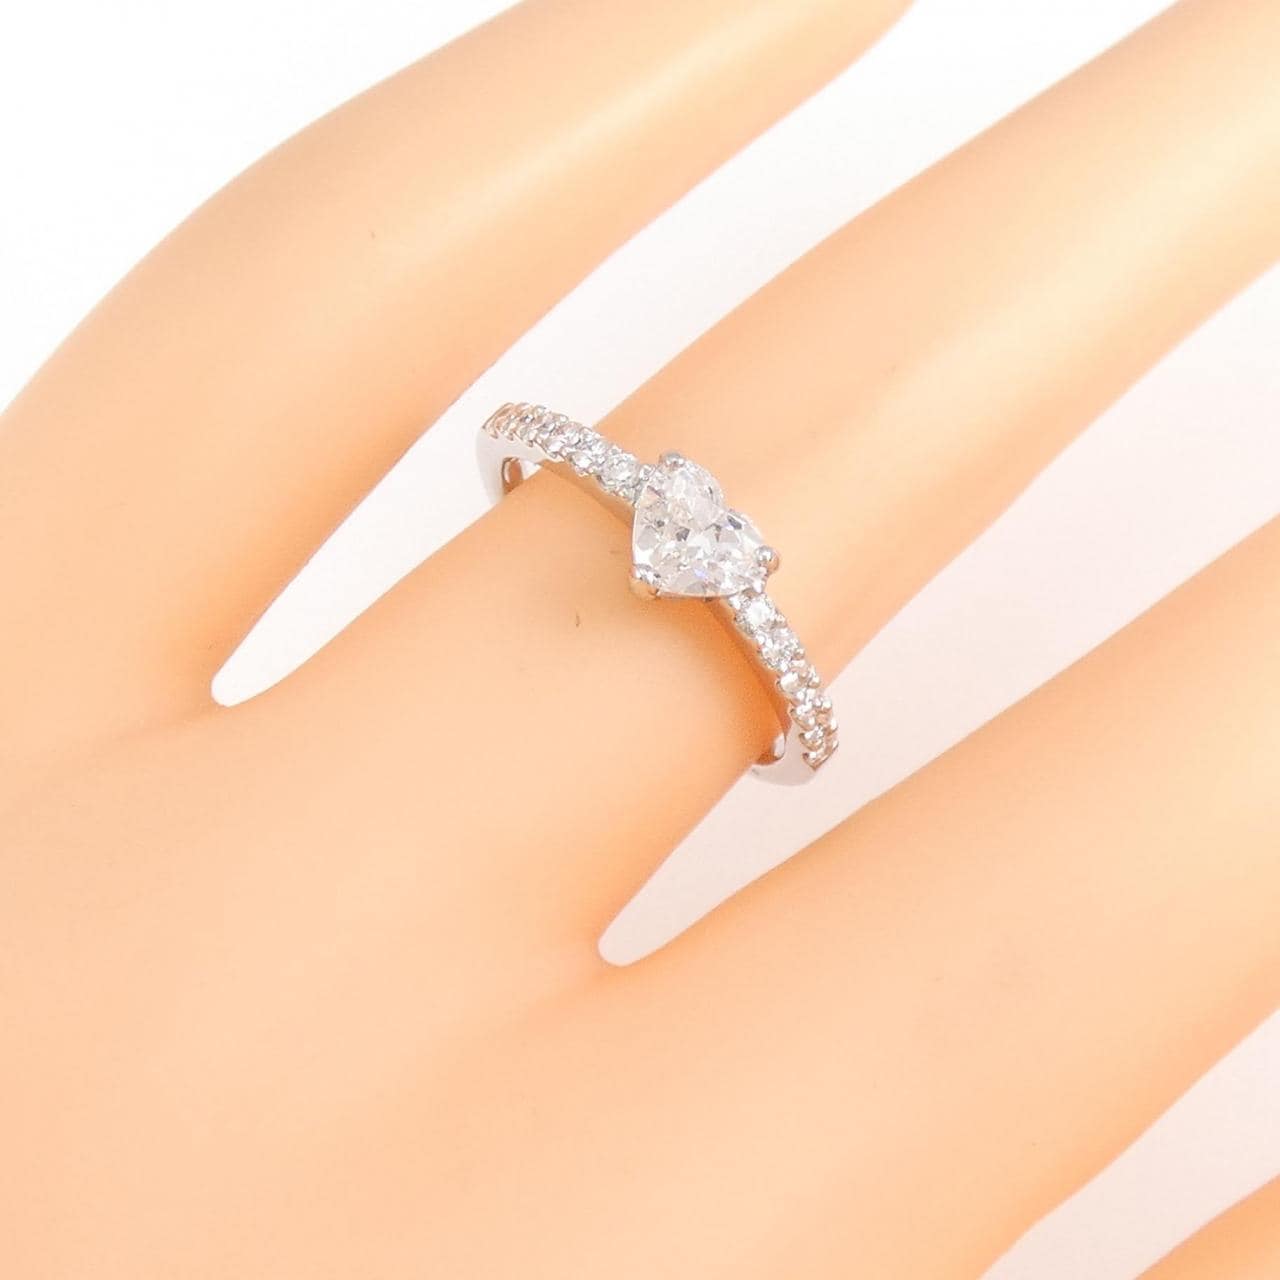 [Remake] PT Diamond Ring 0.502CT D VVS2 Heart Shape